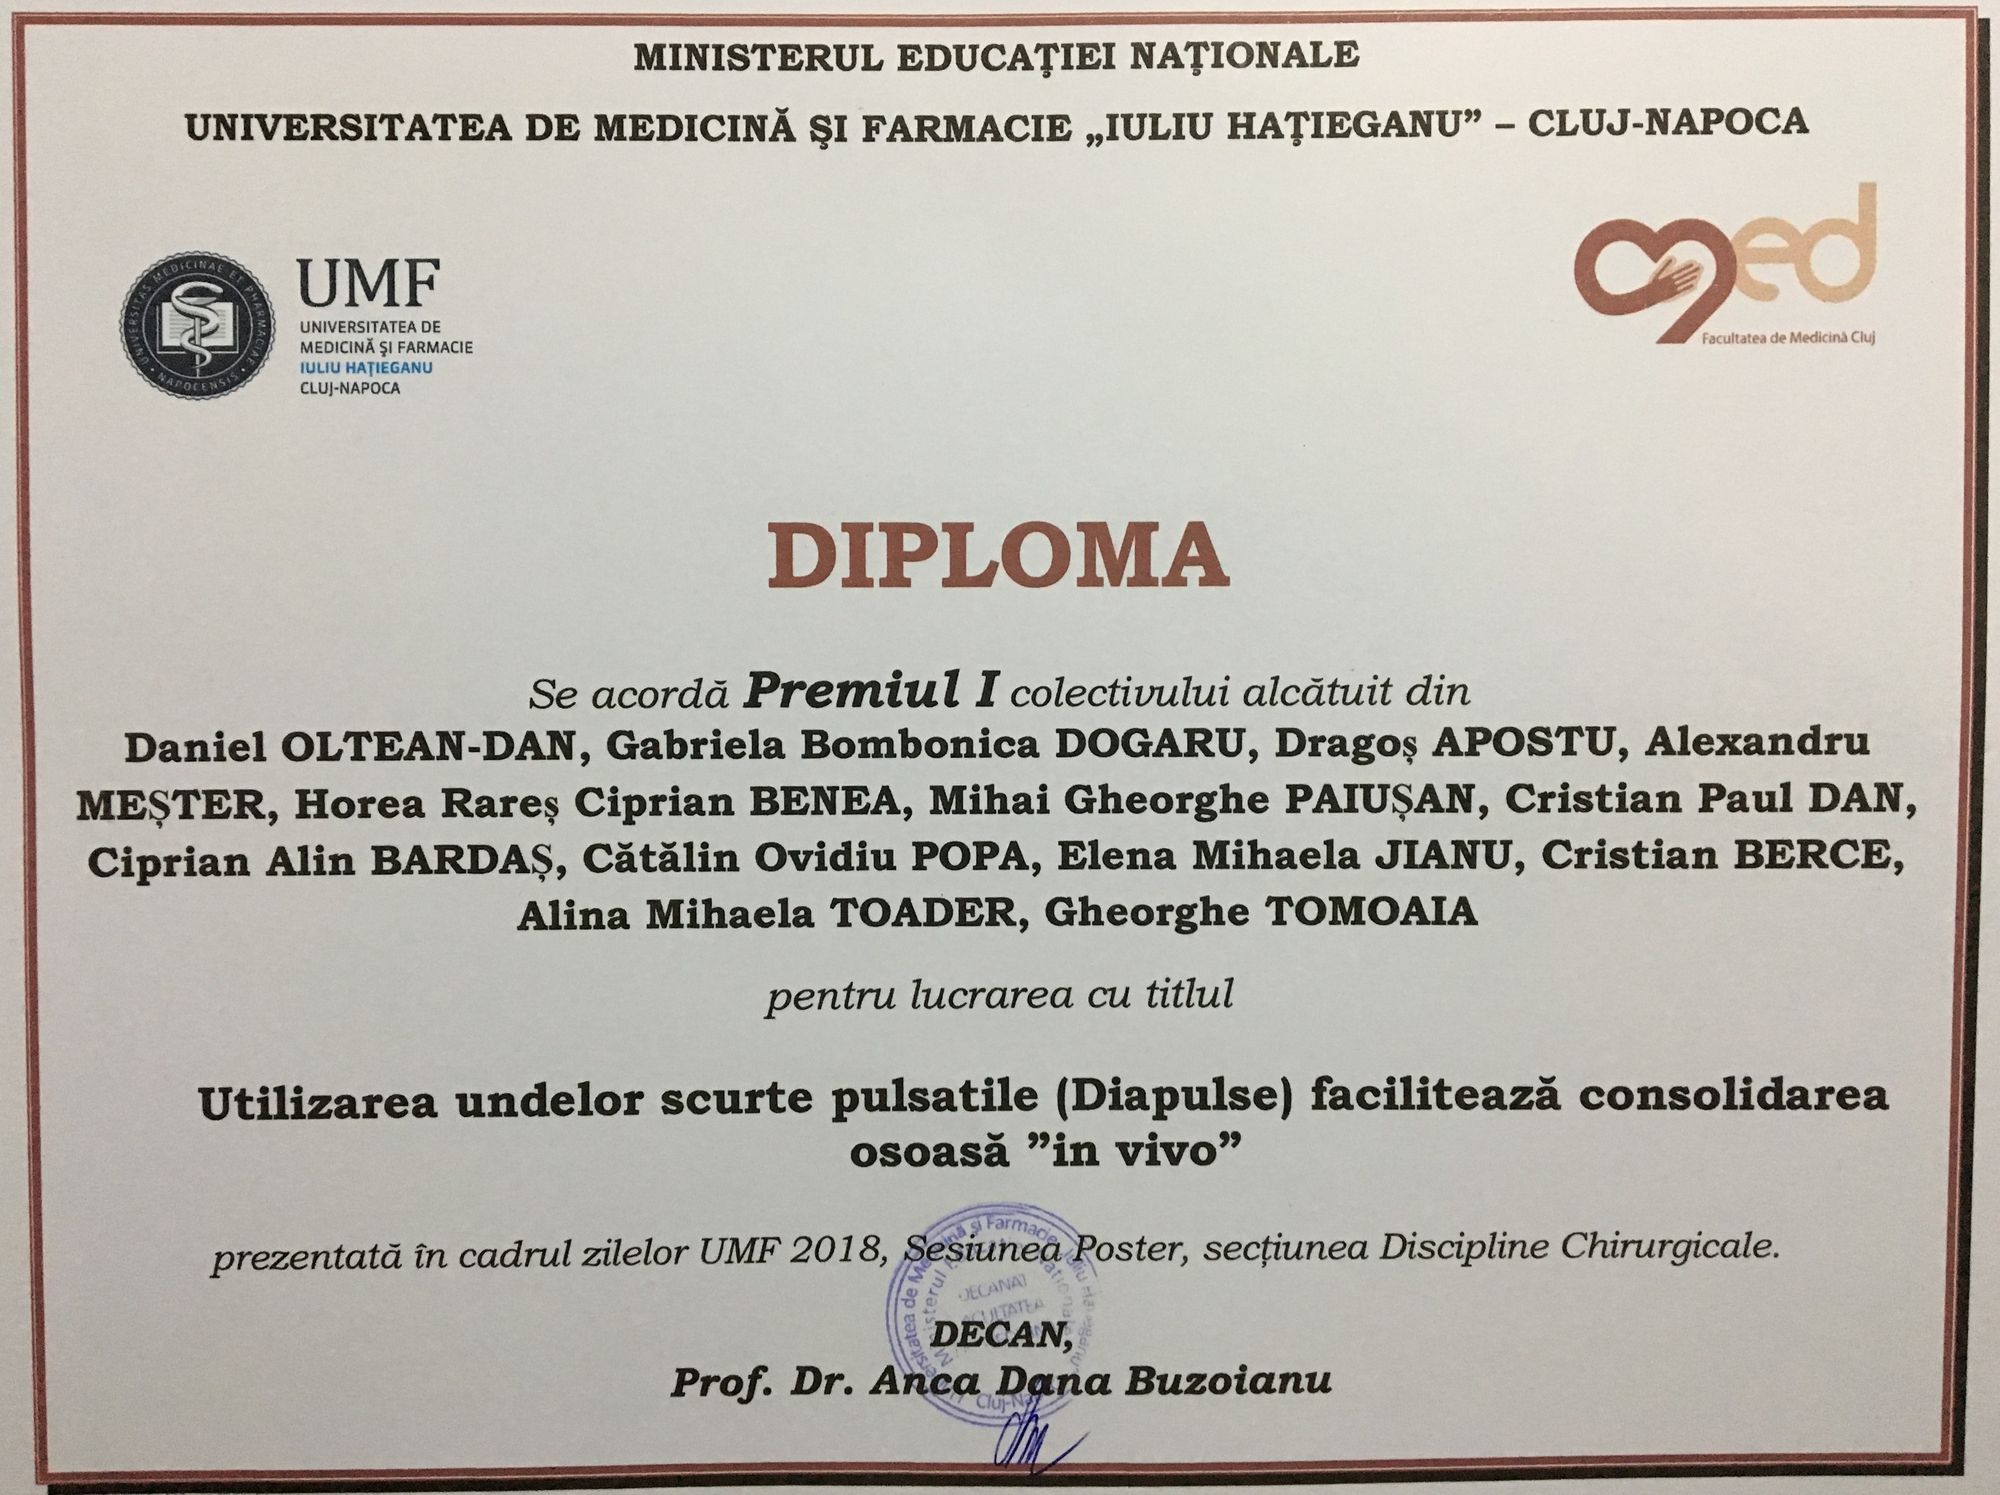 2019 01 diploma pemiu1 UMF 2018